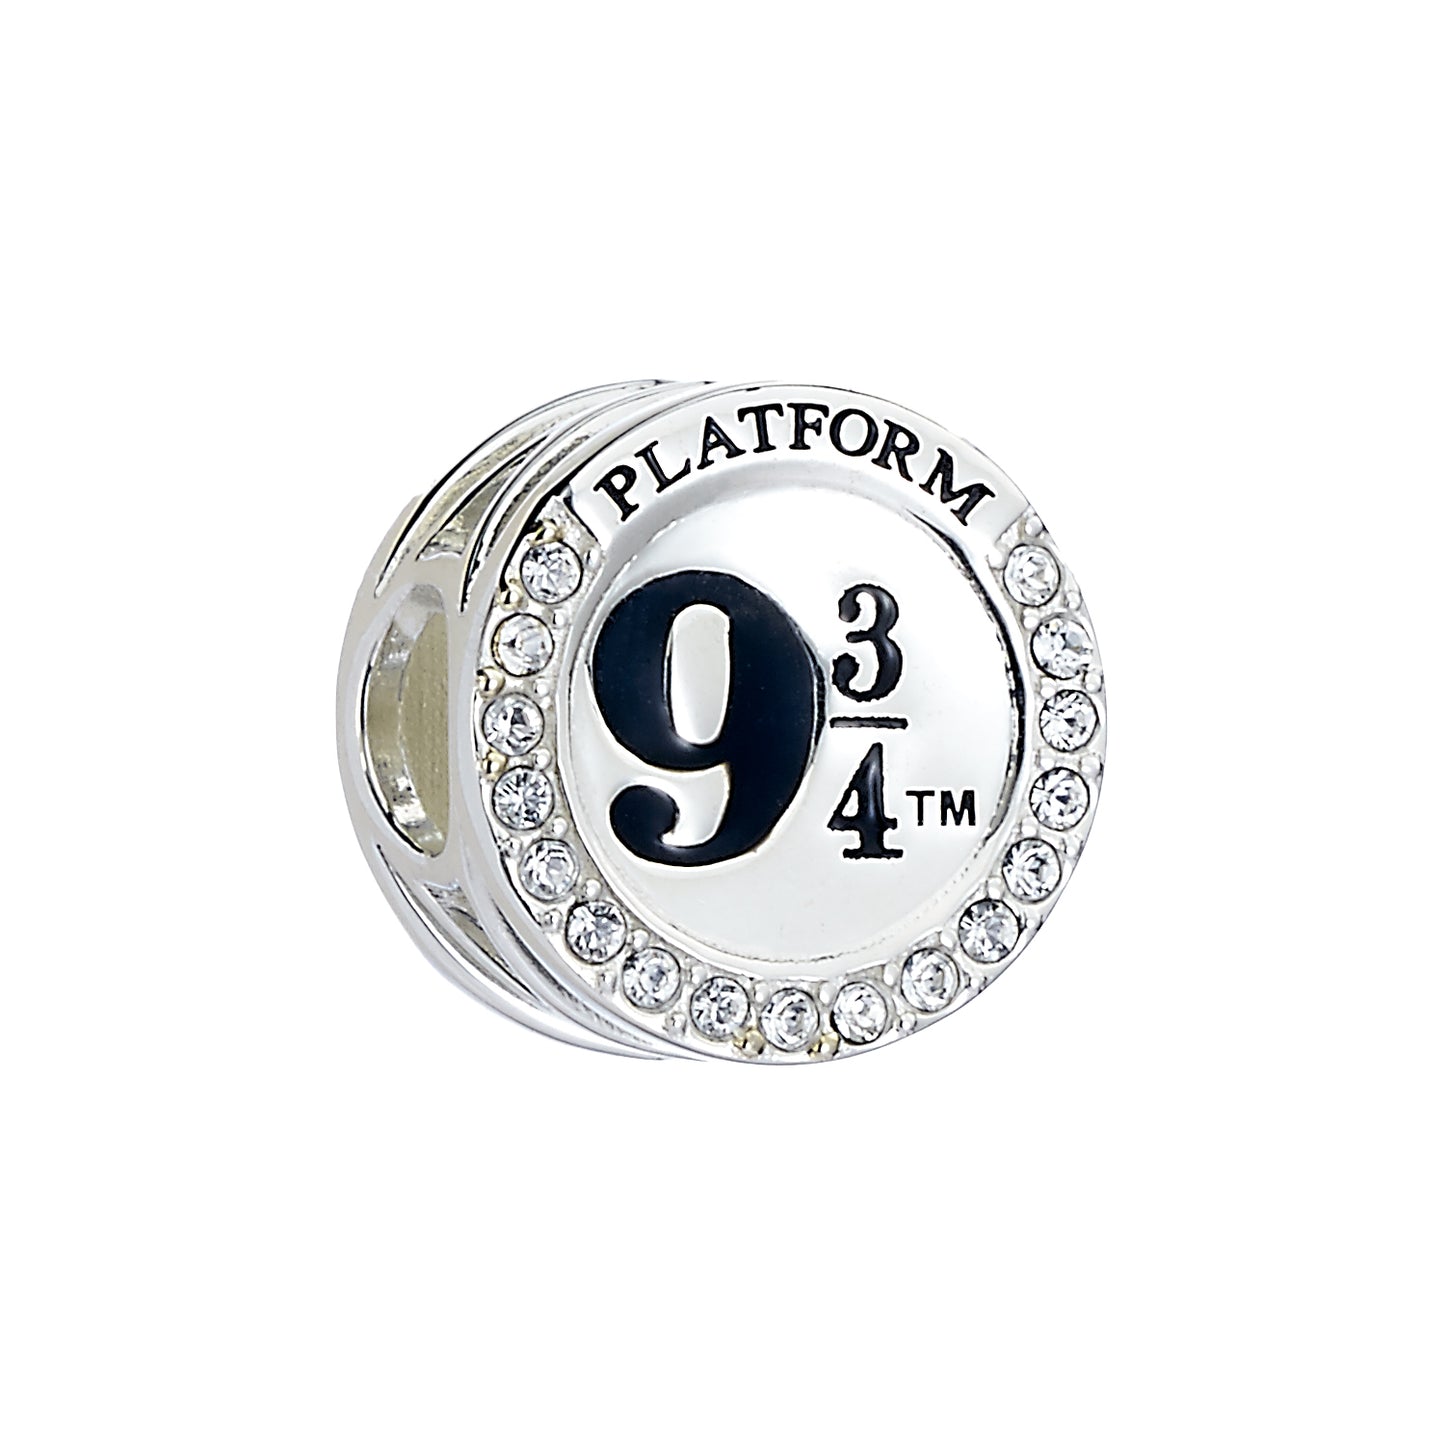 Harry Potter Platform 9 3/4 Charm Bead Embellished with Crystals - Sterling Silver